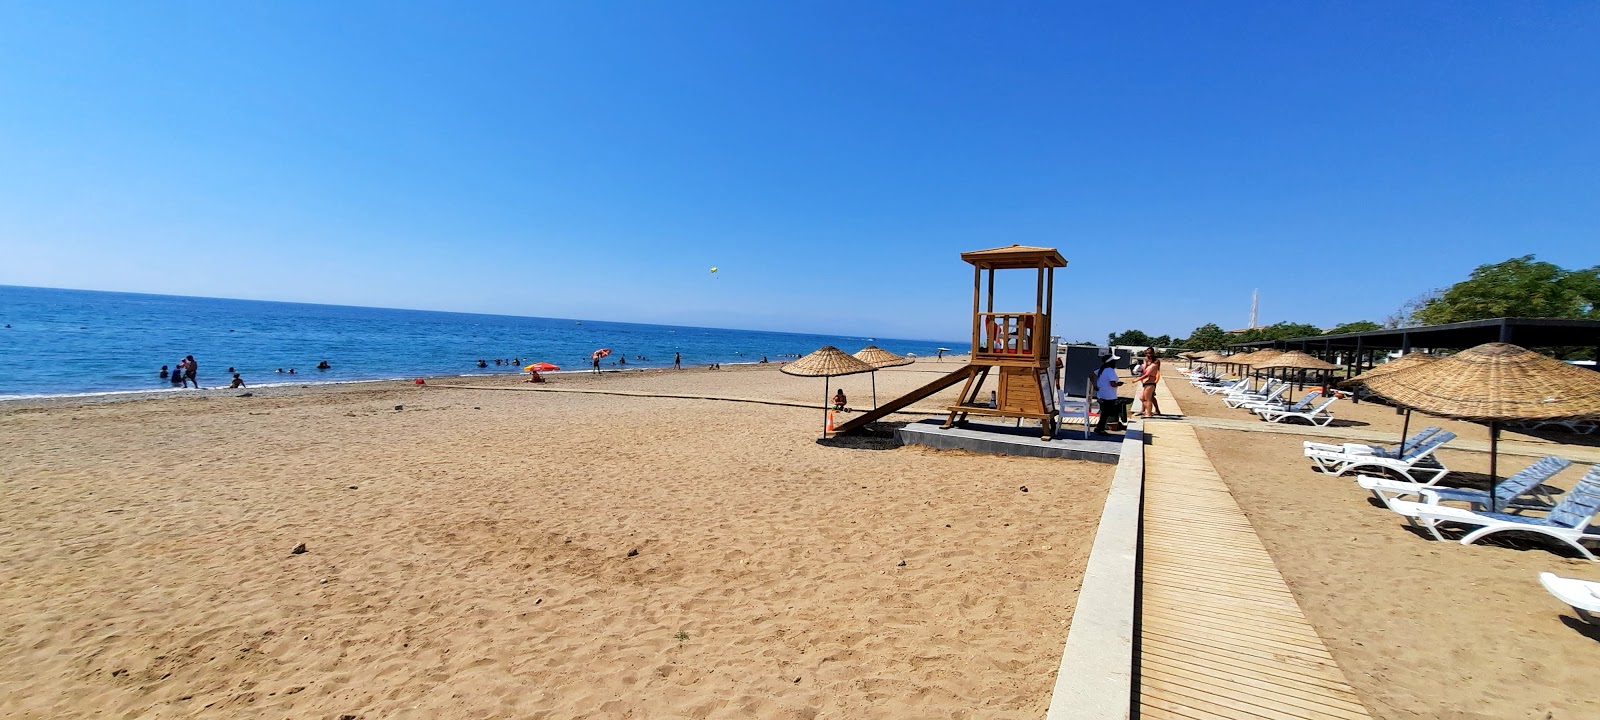 Photo of Belek beach II with brown sand surface